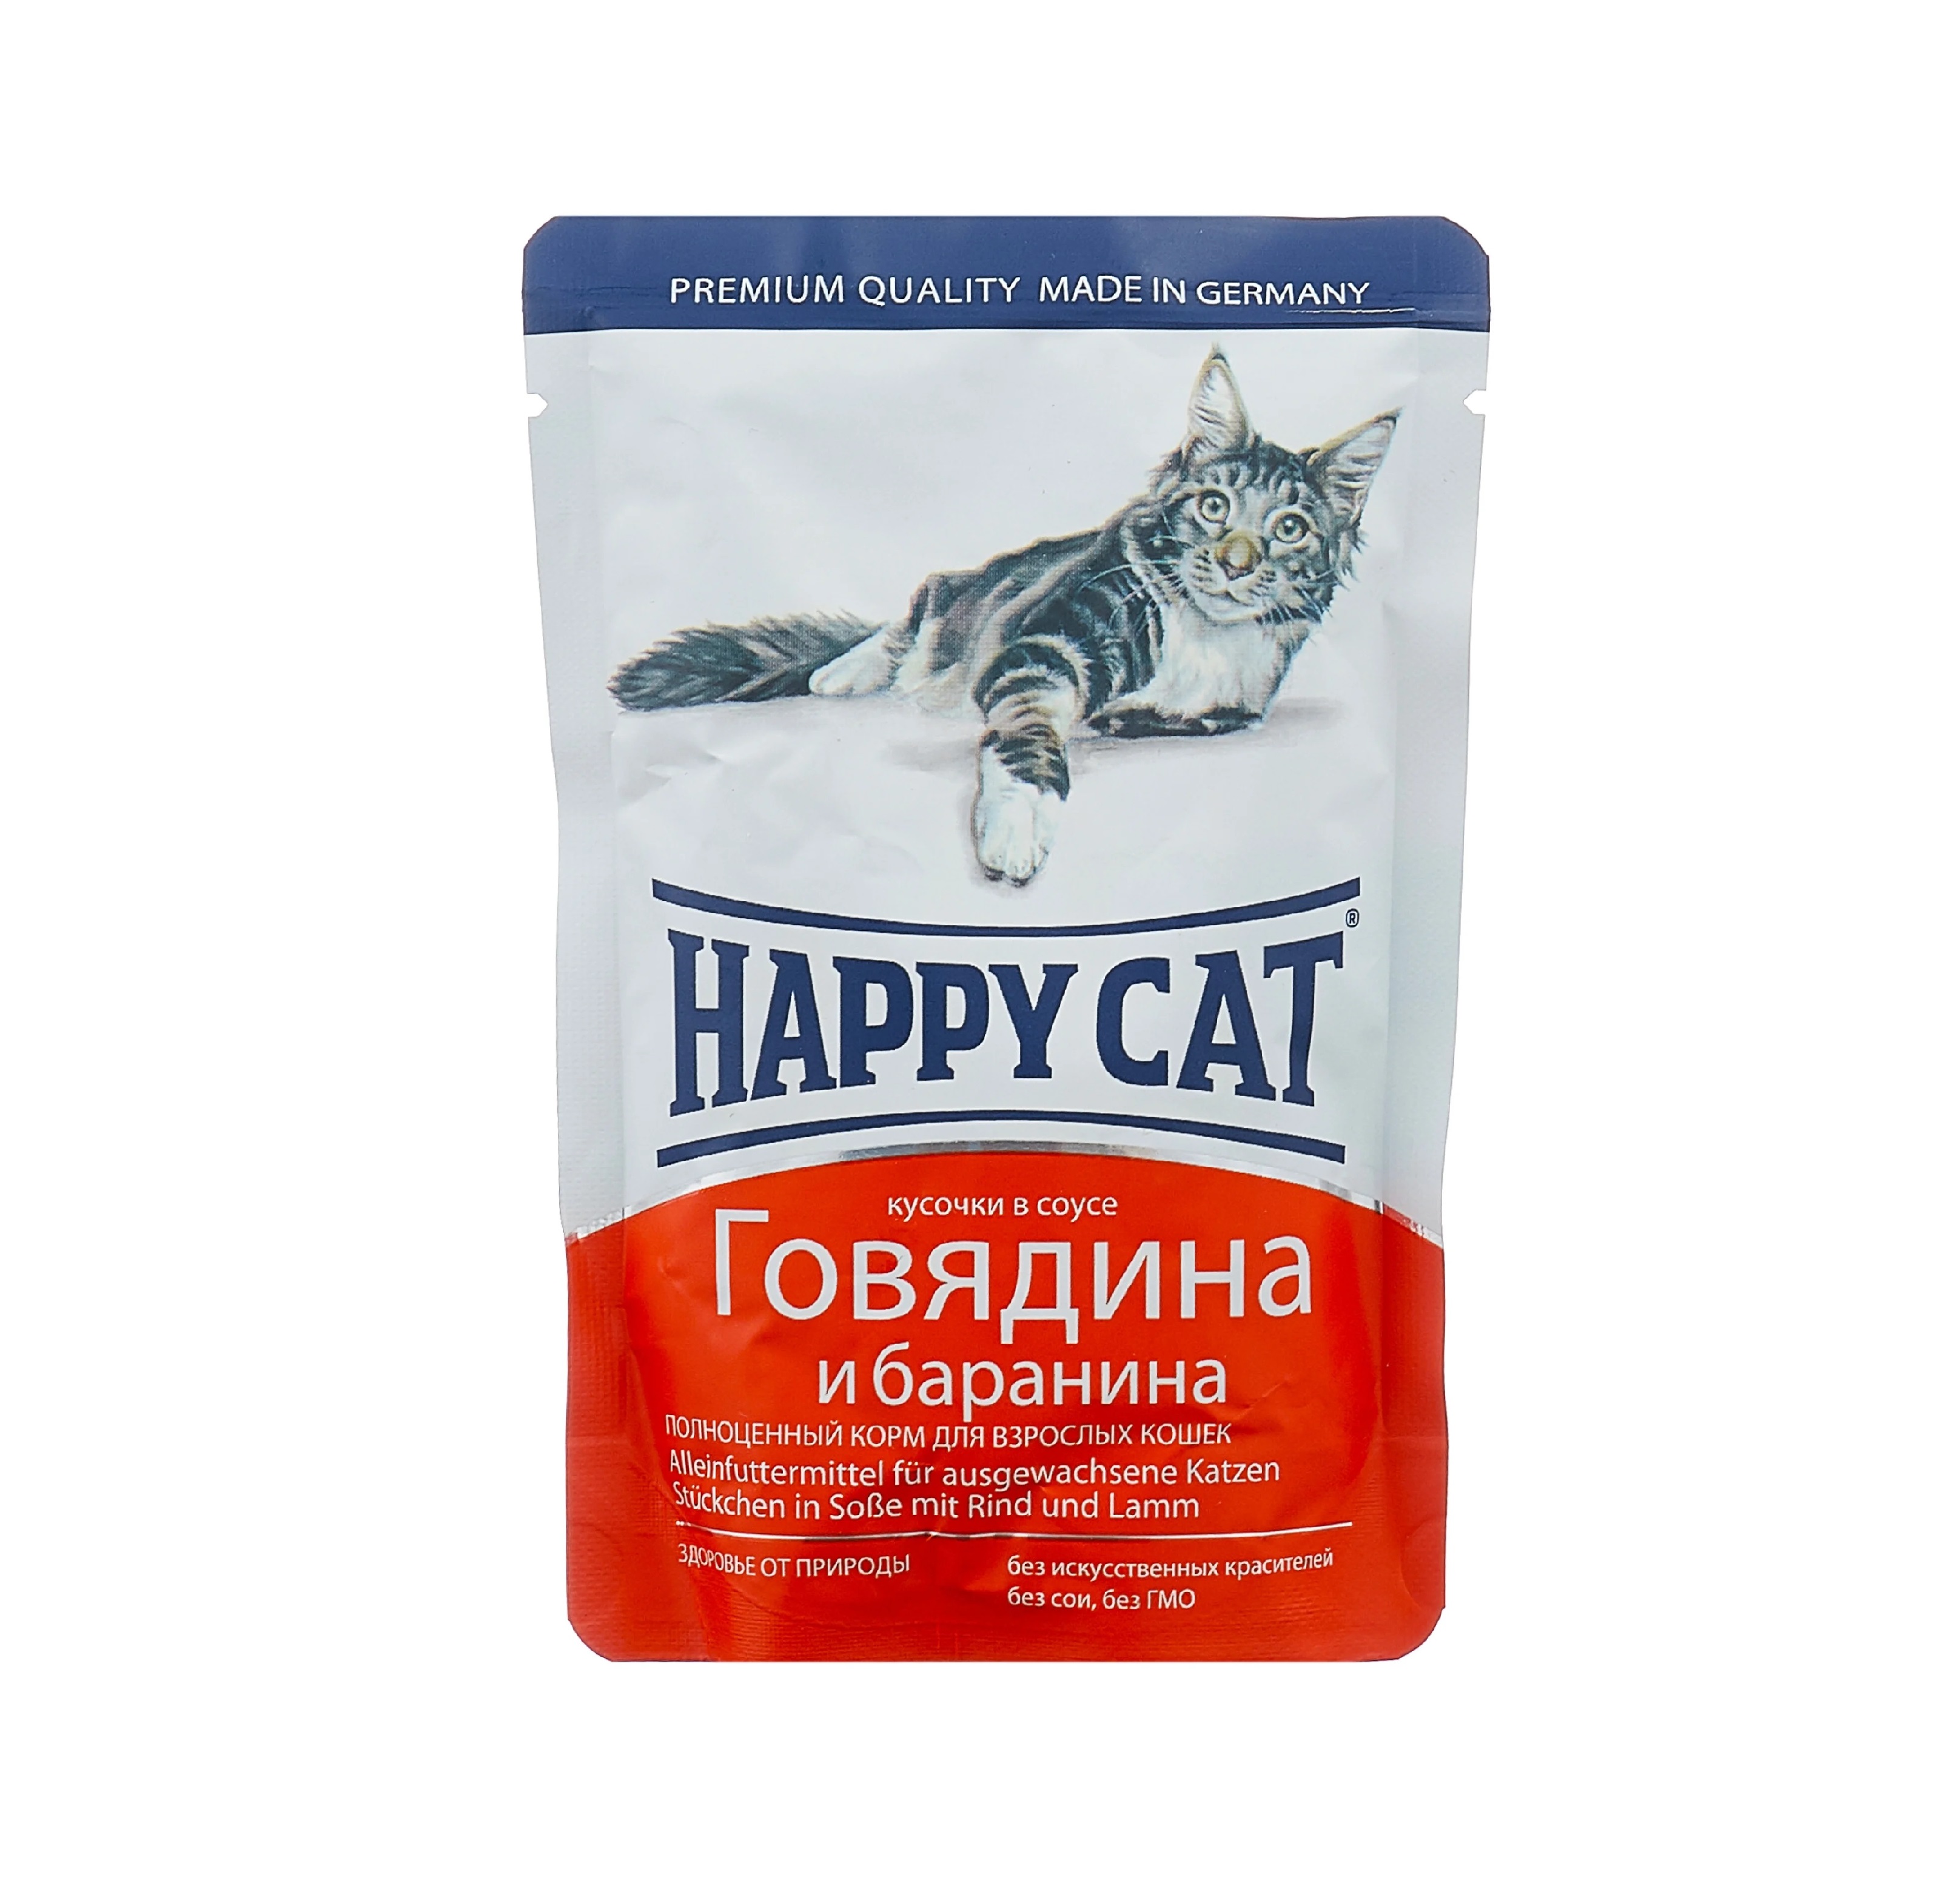 Хэппи Кэт пауч 100гр - Соус - Говядина/Баранина (Happy Cat)